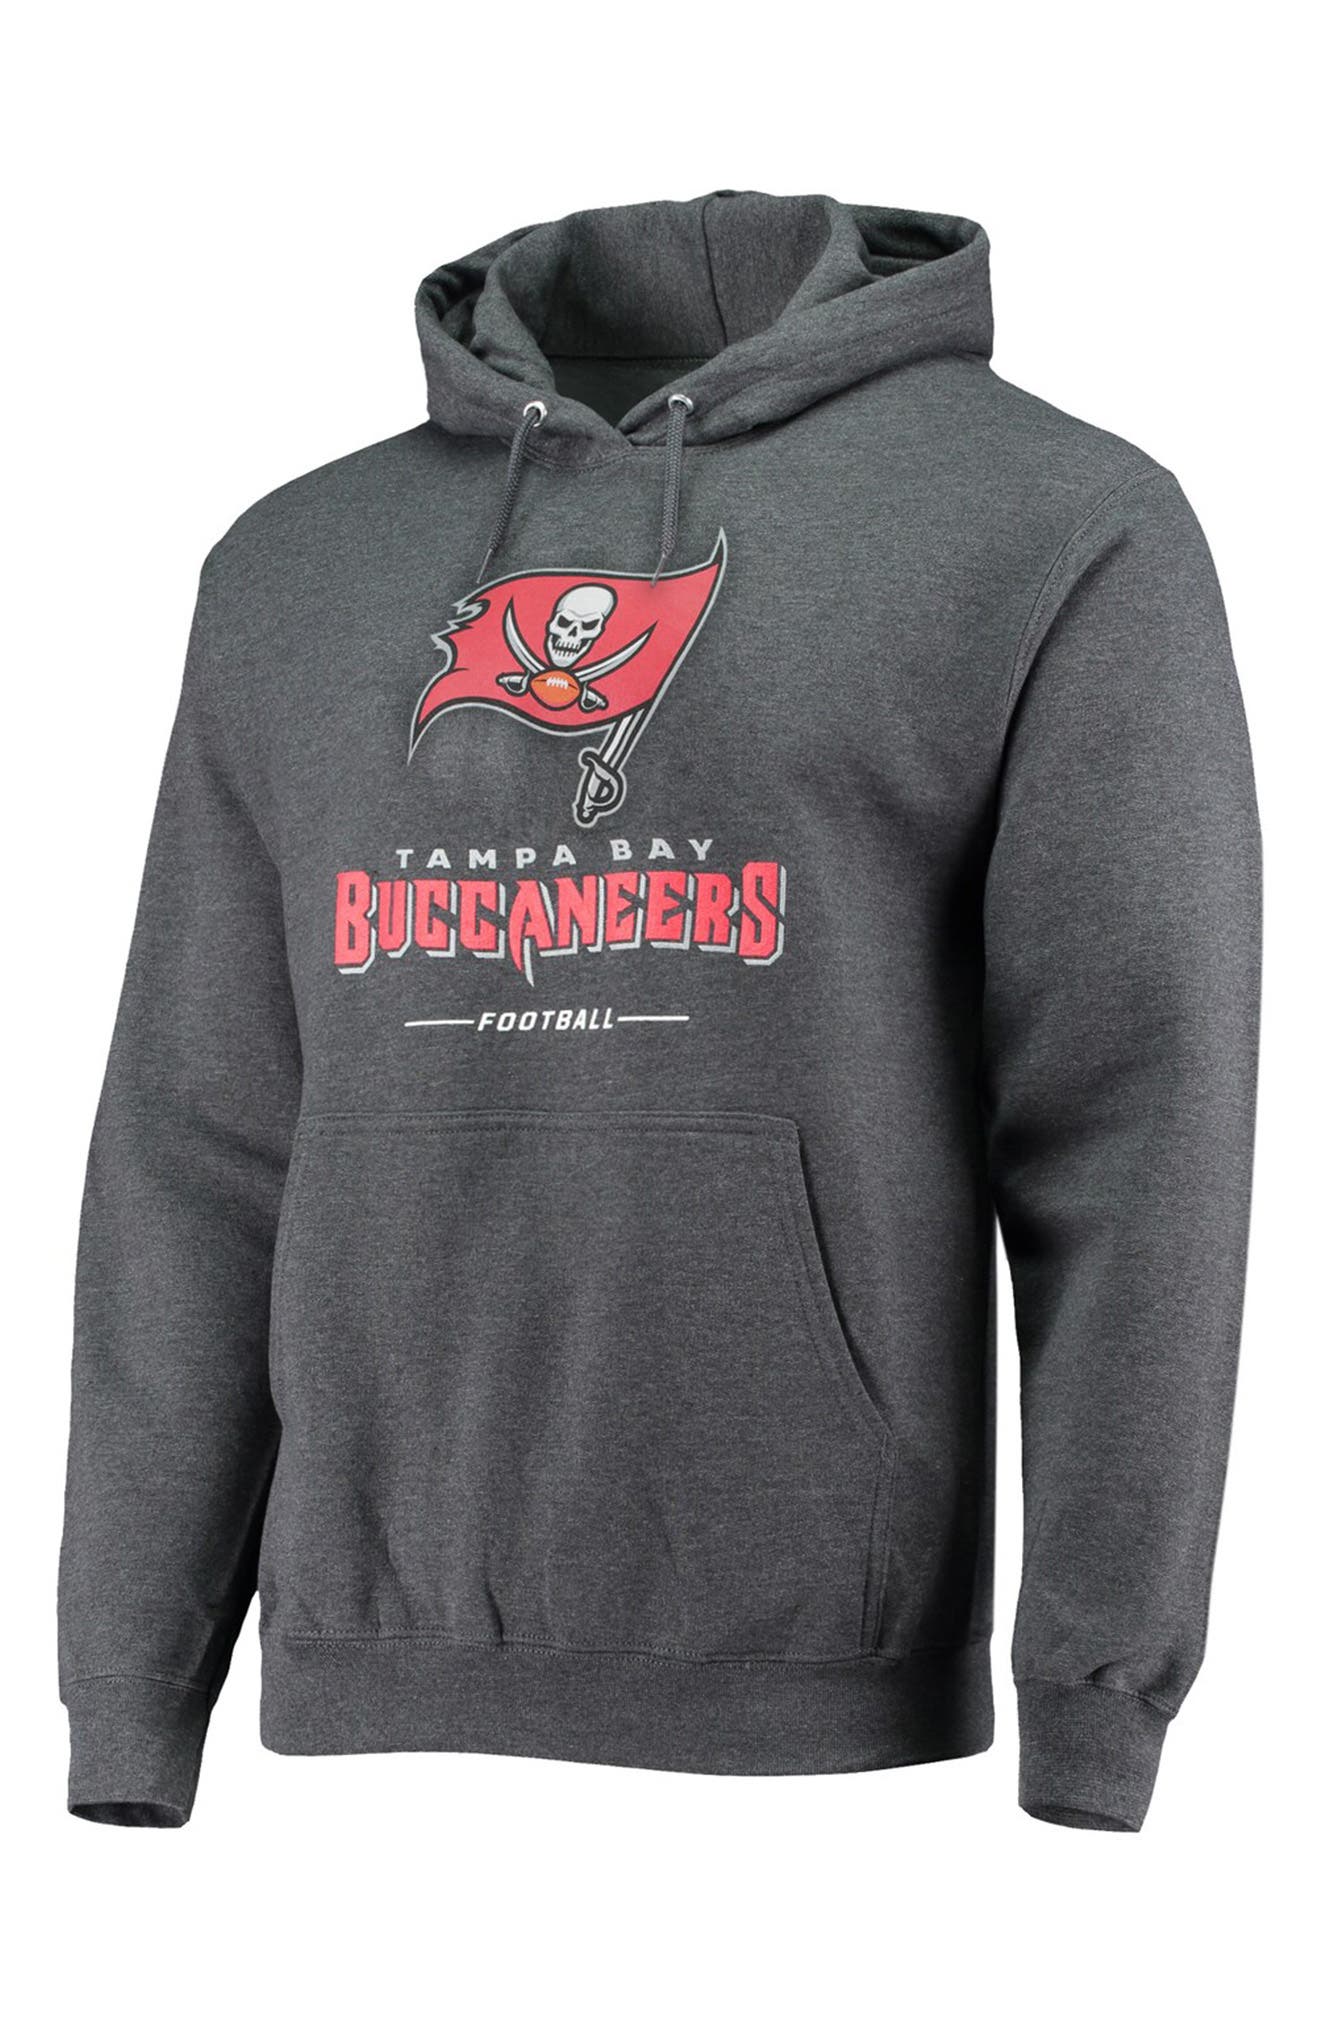 Tampa Bay Buccaneers Football Hoodie Sweatshirt Casual Jacket Coat Gifts Top 